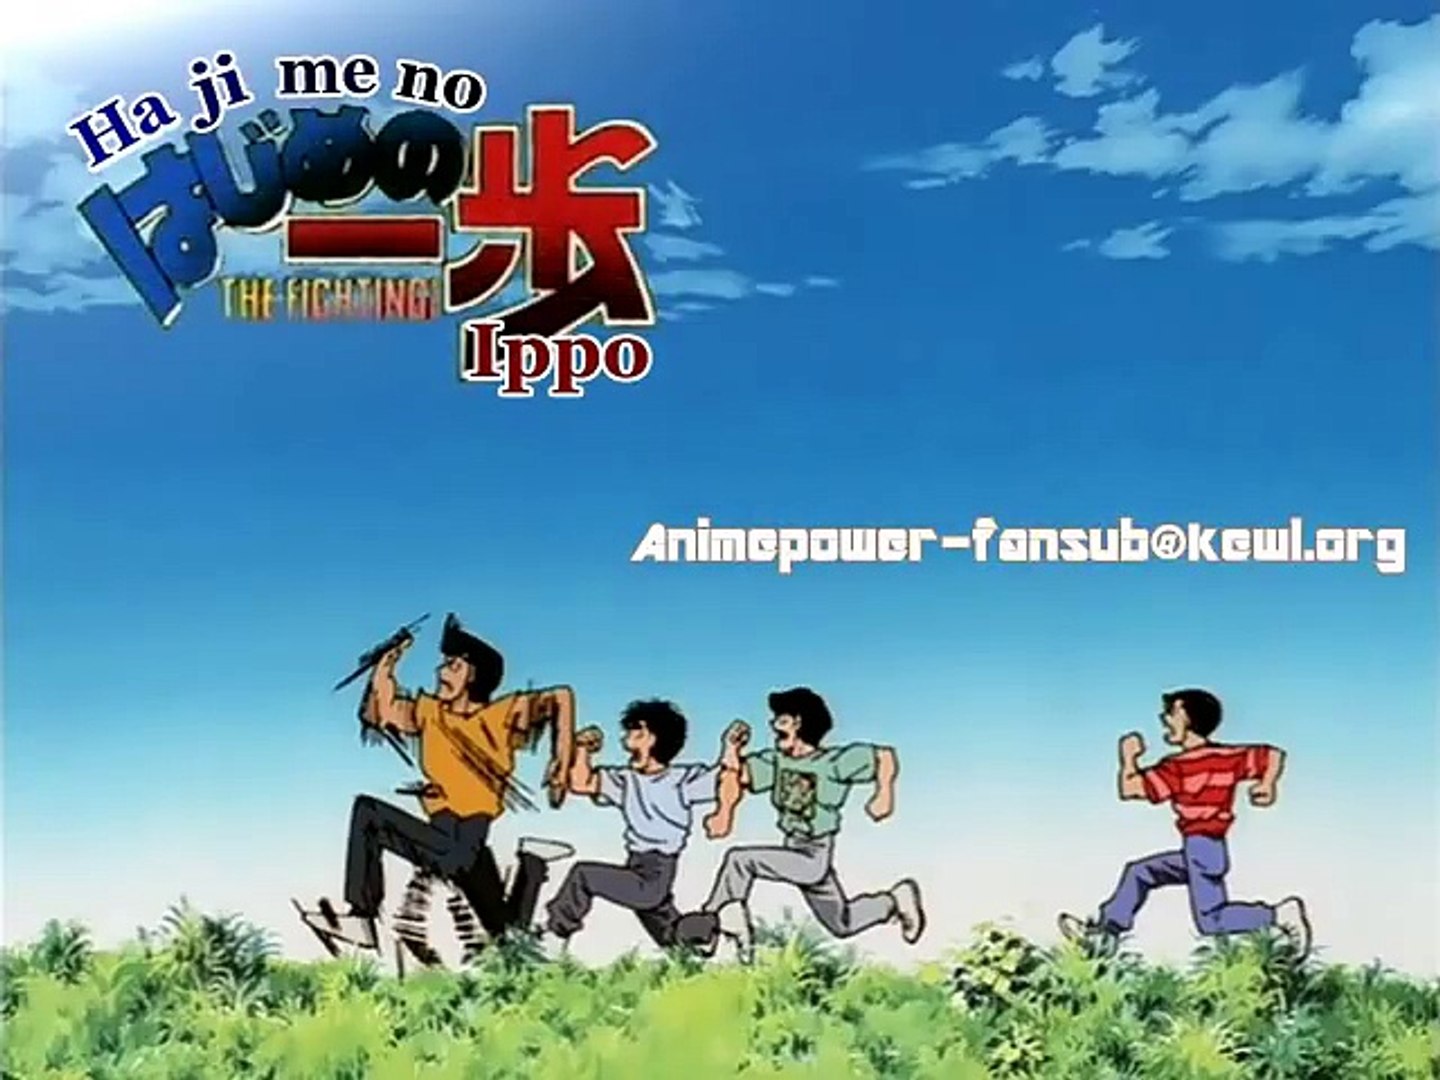 Hajime no Ippo - A Promessa do Reencontro, Episódio 8 Temporada 1 - Vídeo  Dailymotion